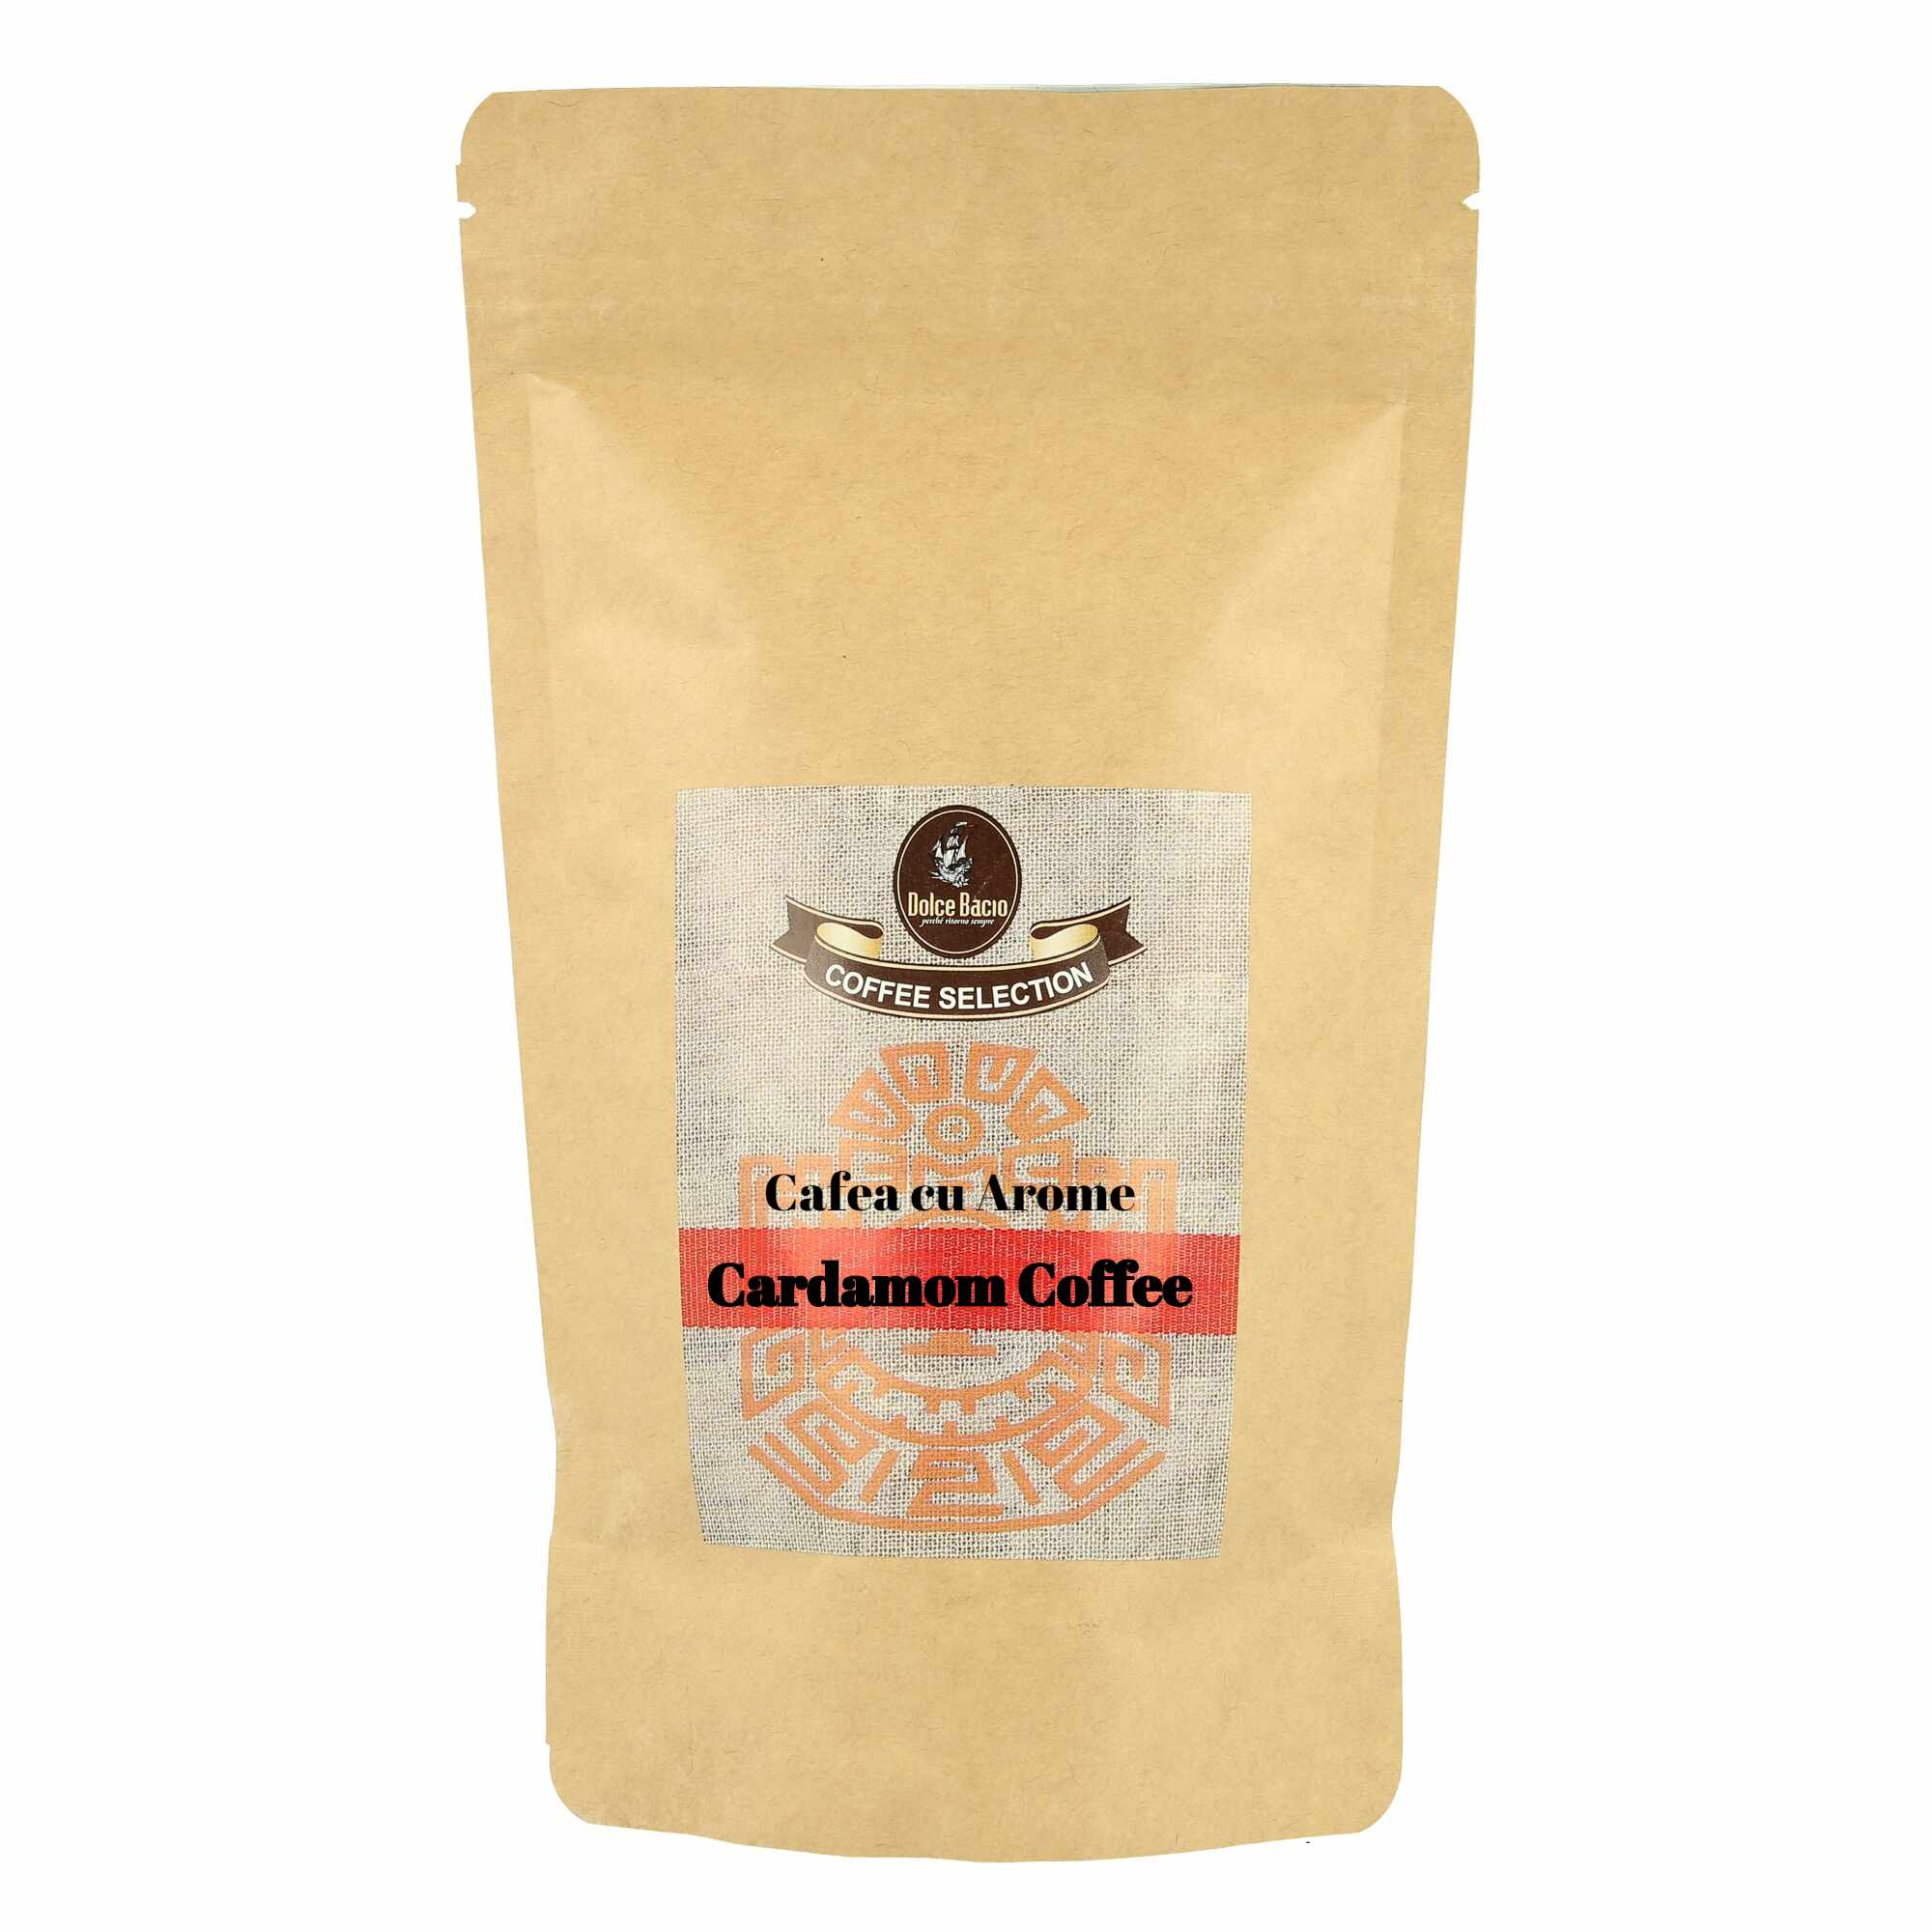 Cardamom Coffee 400g french press